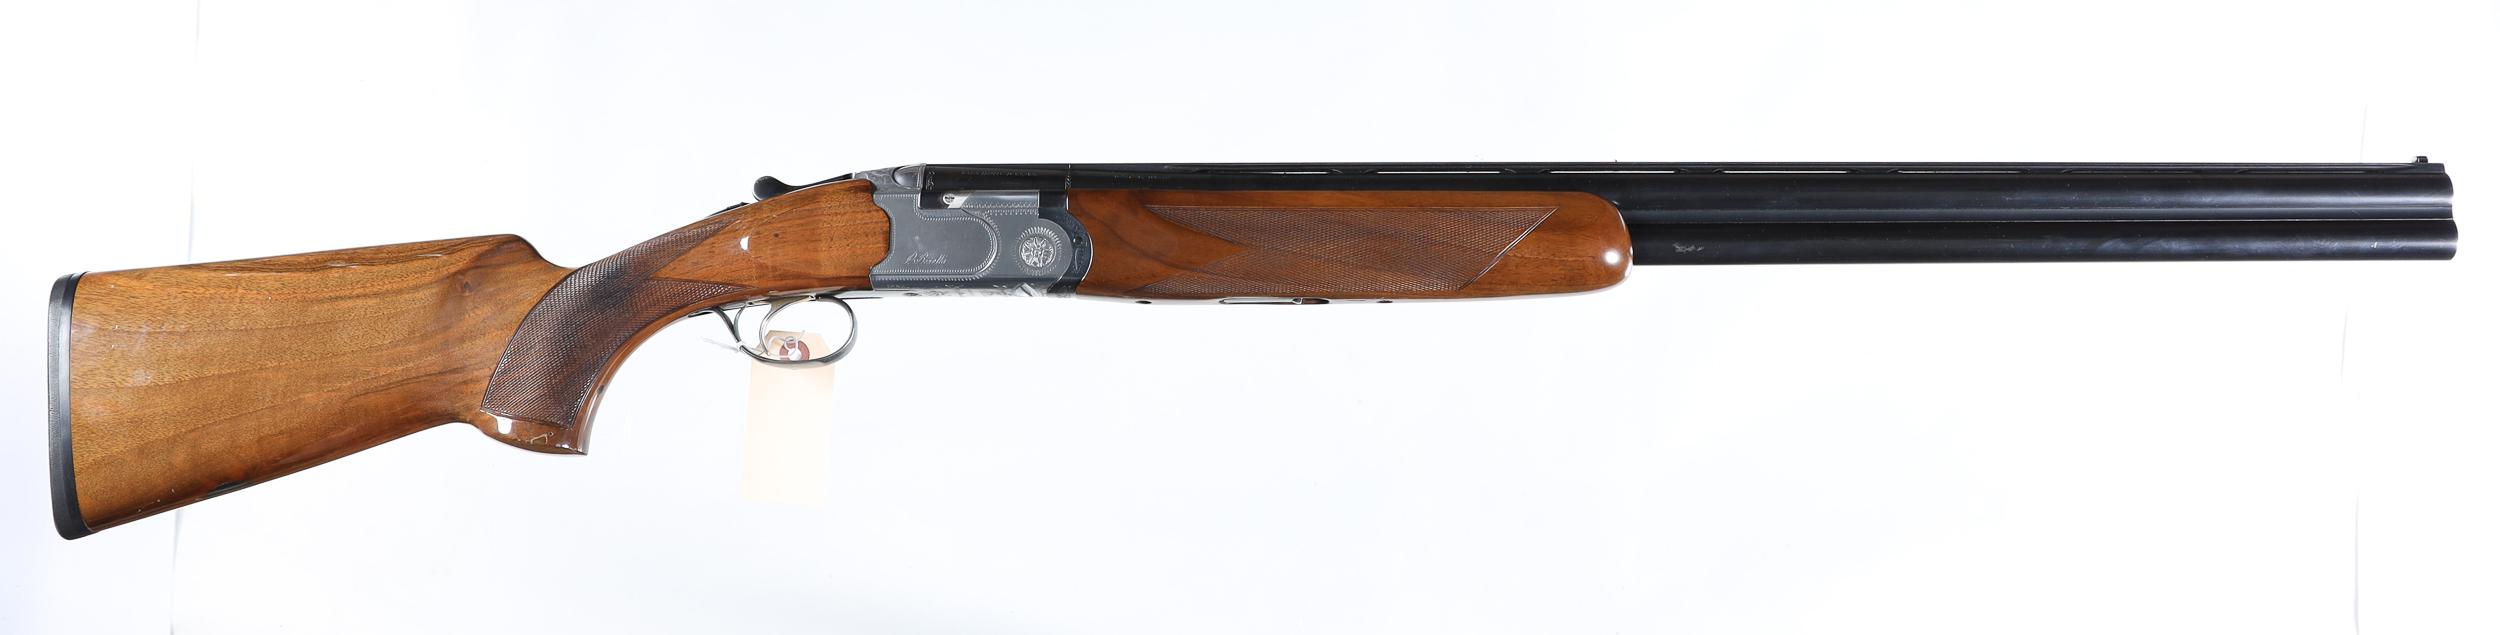 Beretta S-680 O/U Shotgun 12ga